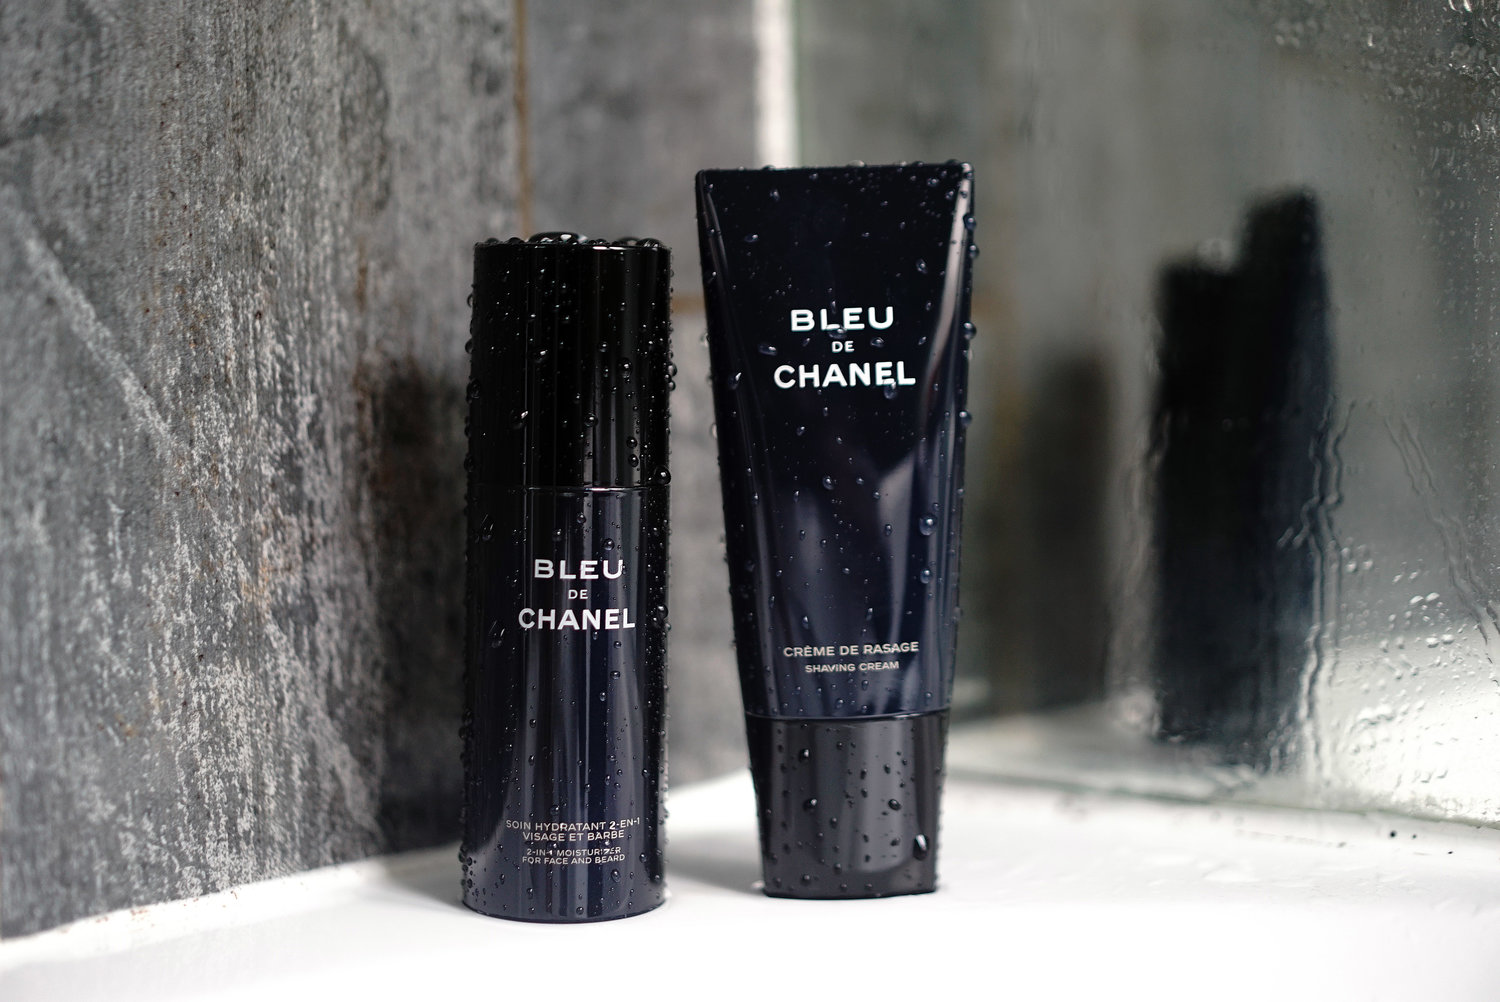 BLEU DE CHANEL – Fragrance for Men